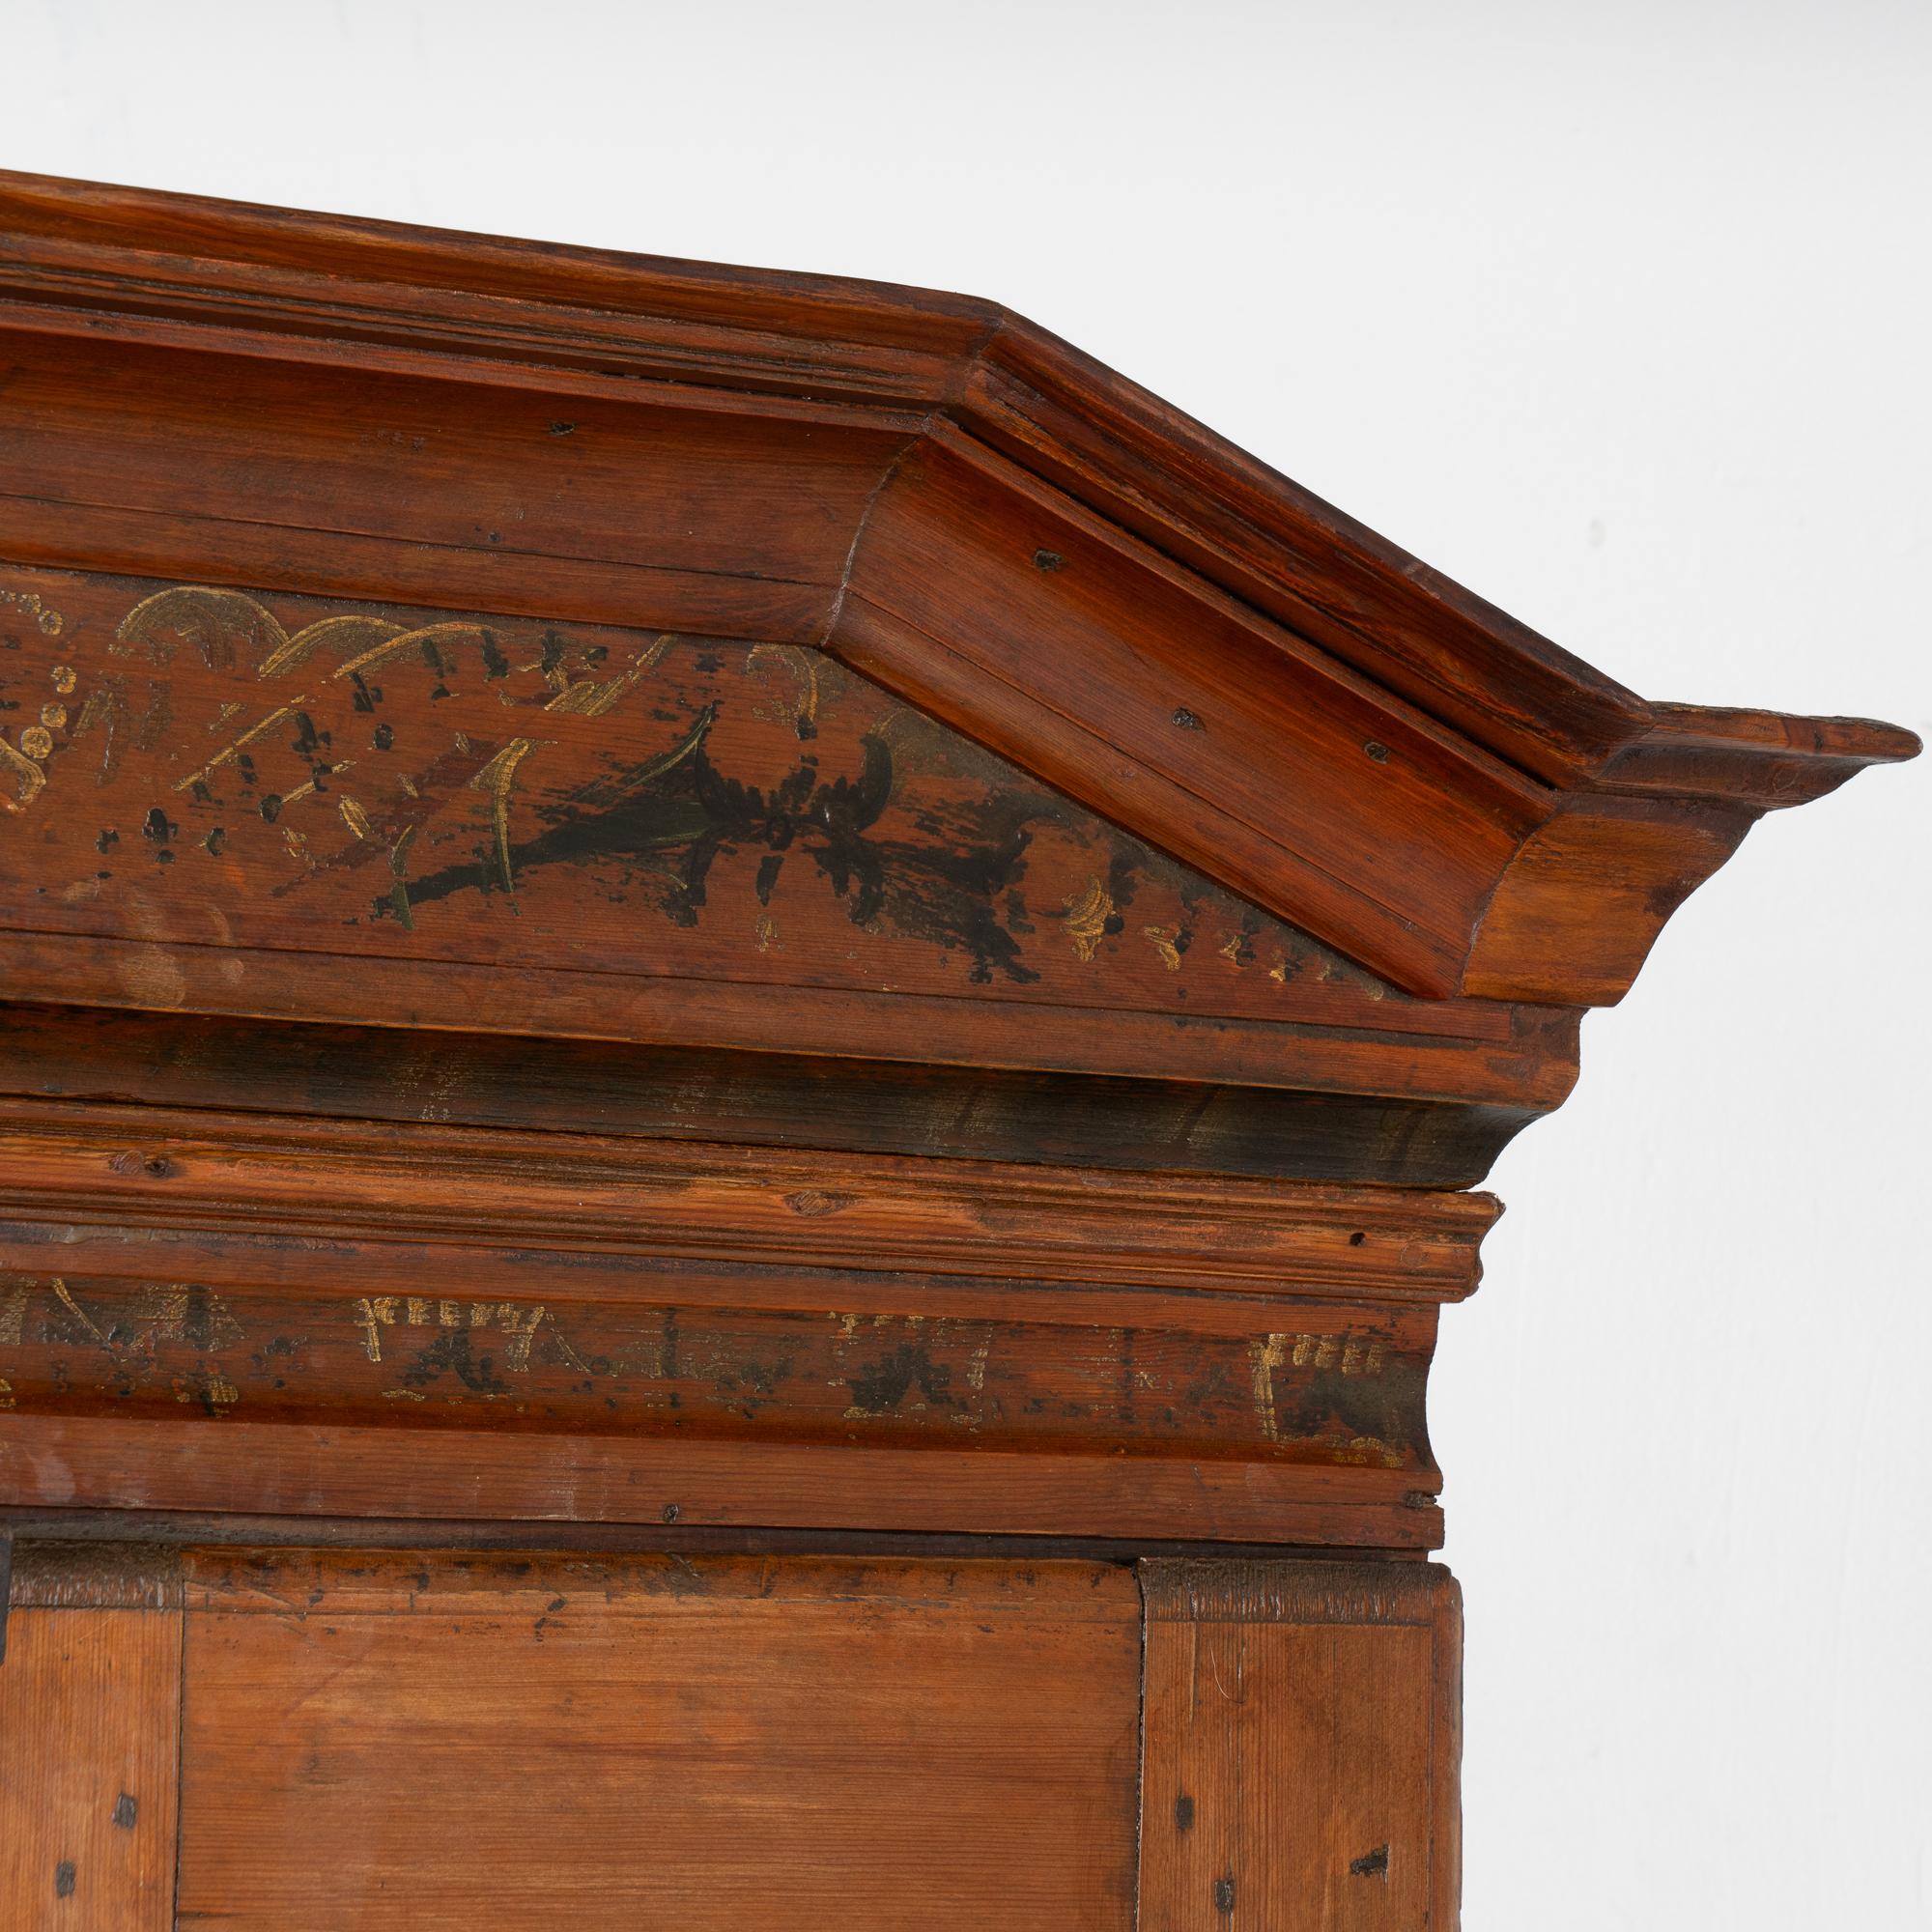 Original Painted Pine Swedish Cabinet Cupboard, circa 1820-40 For Sale 2